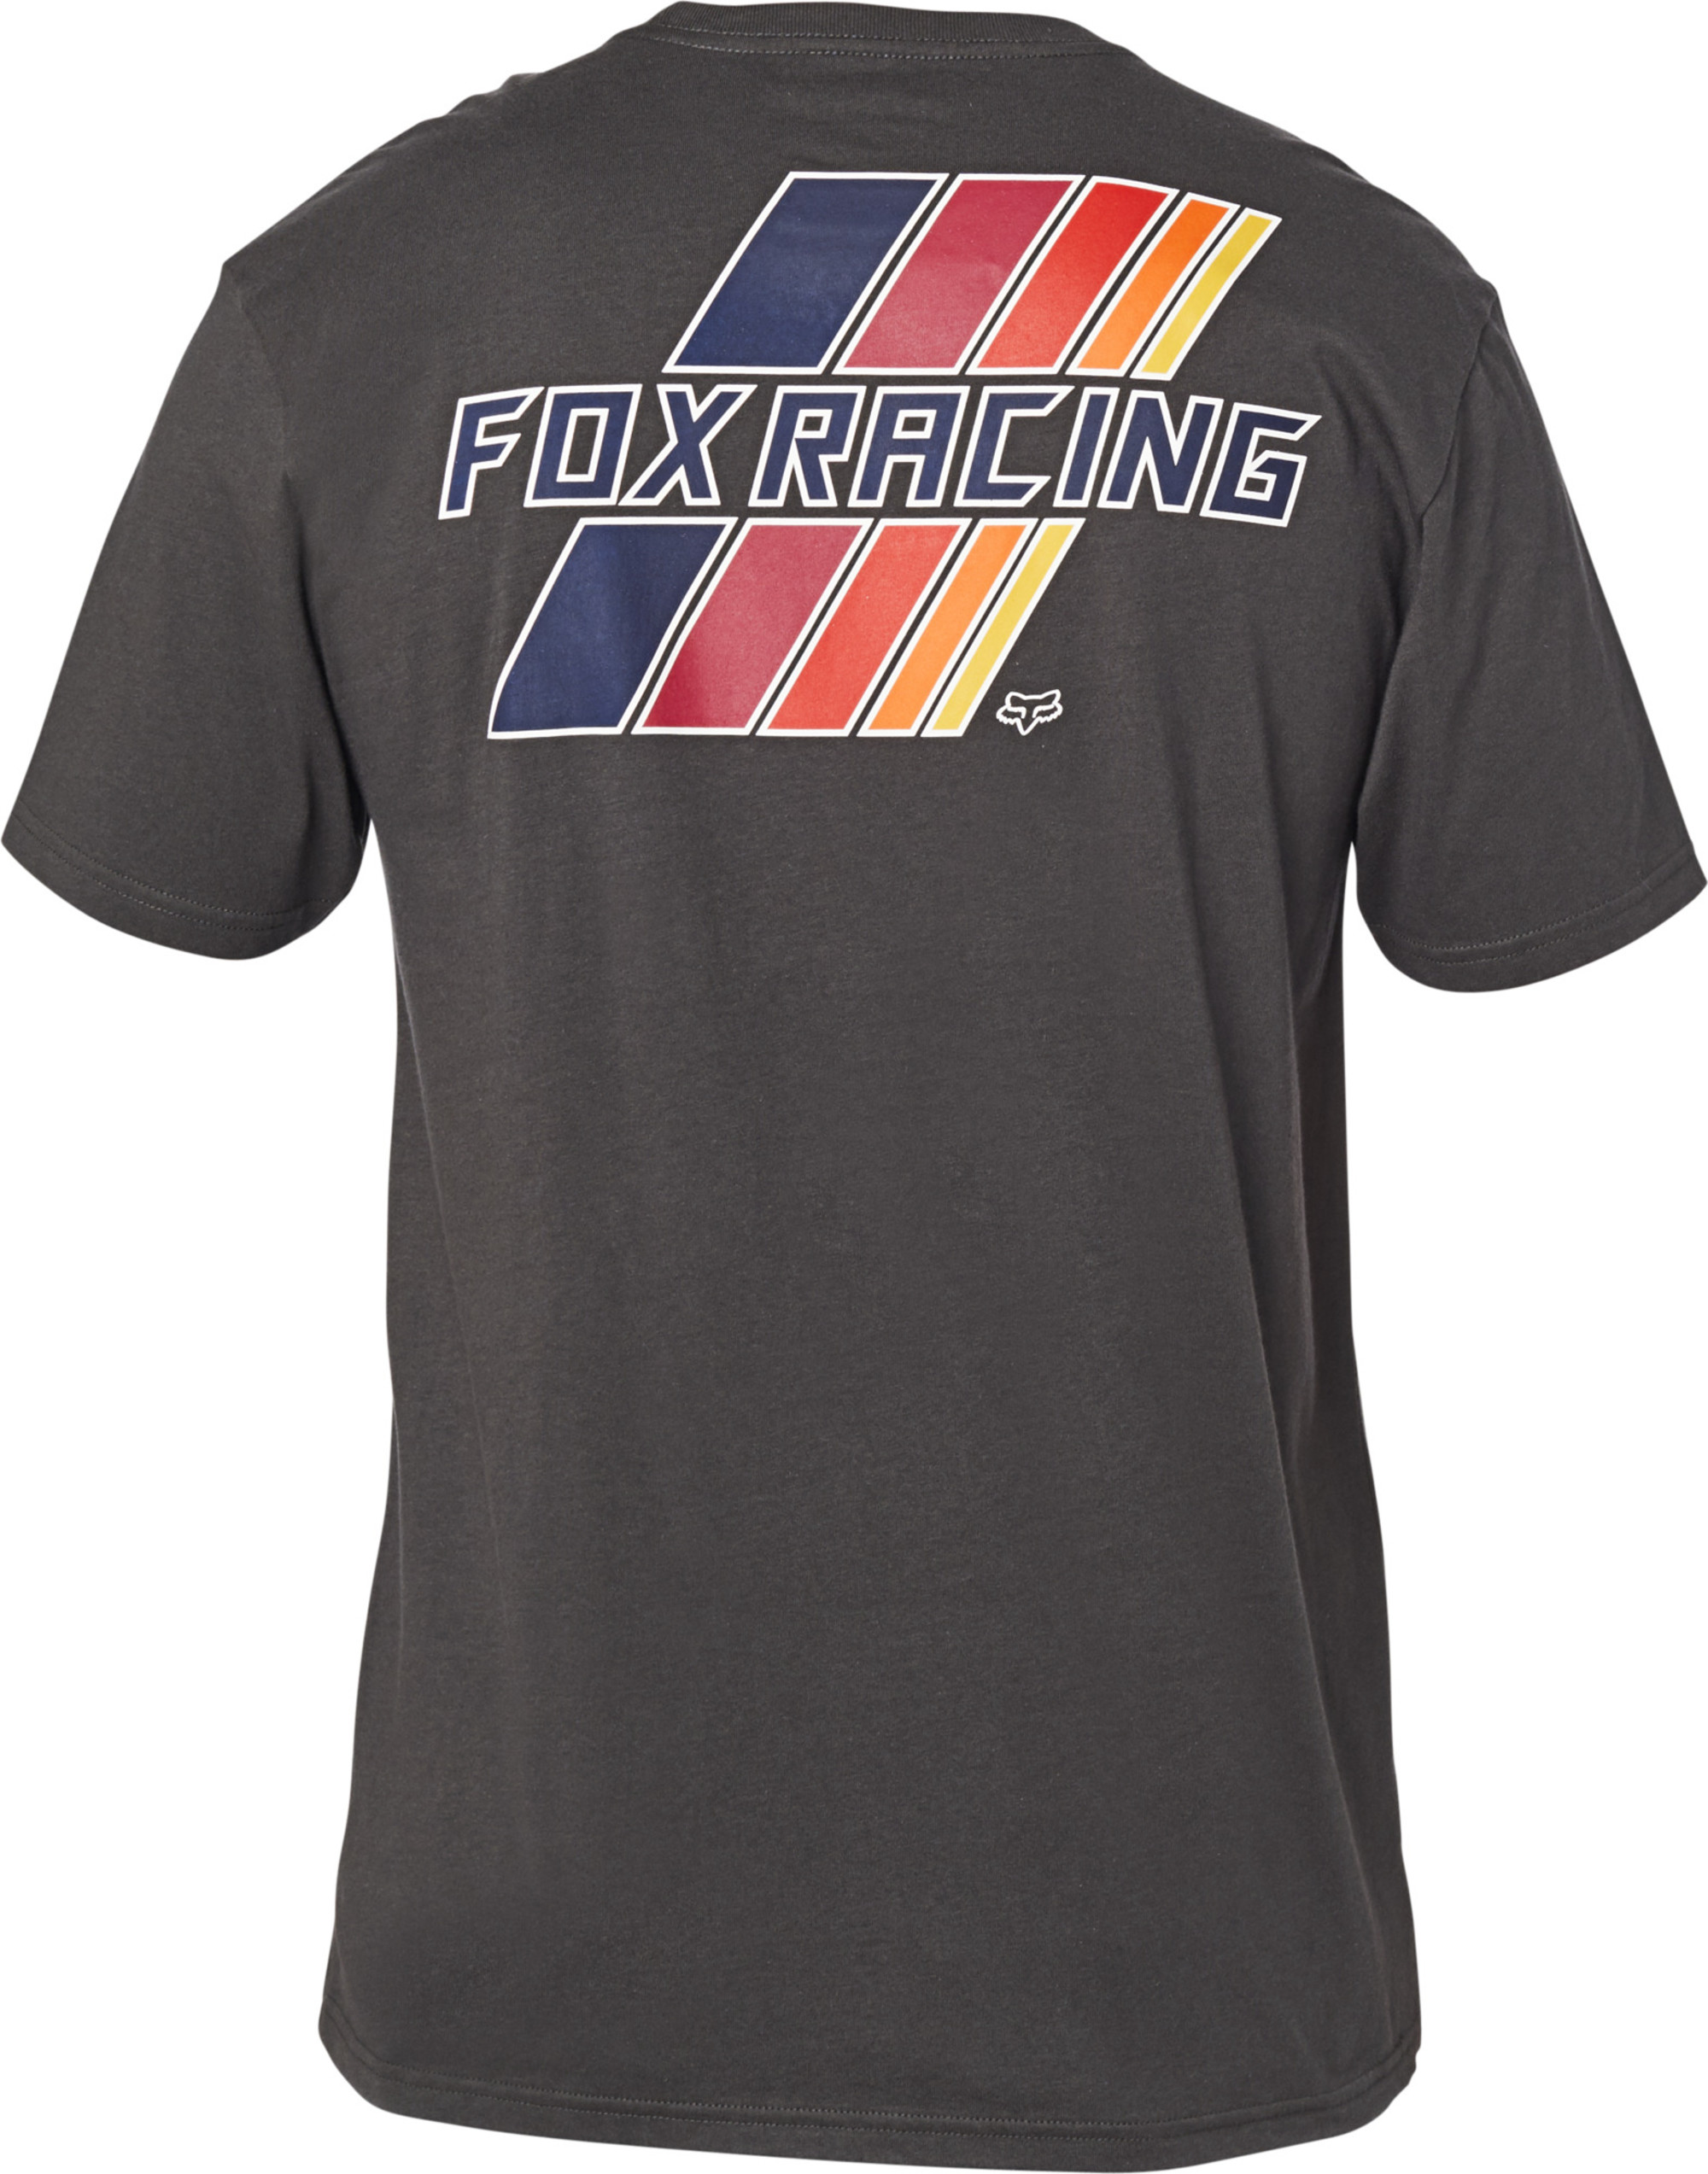 fox racing t-shirt shirts for men power slide premium